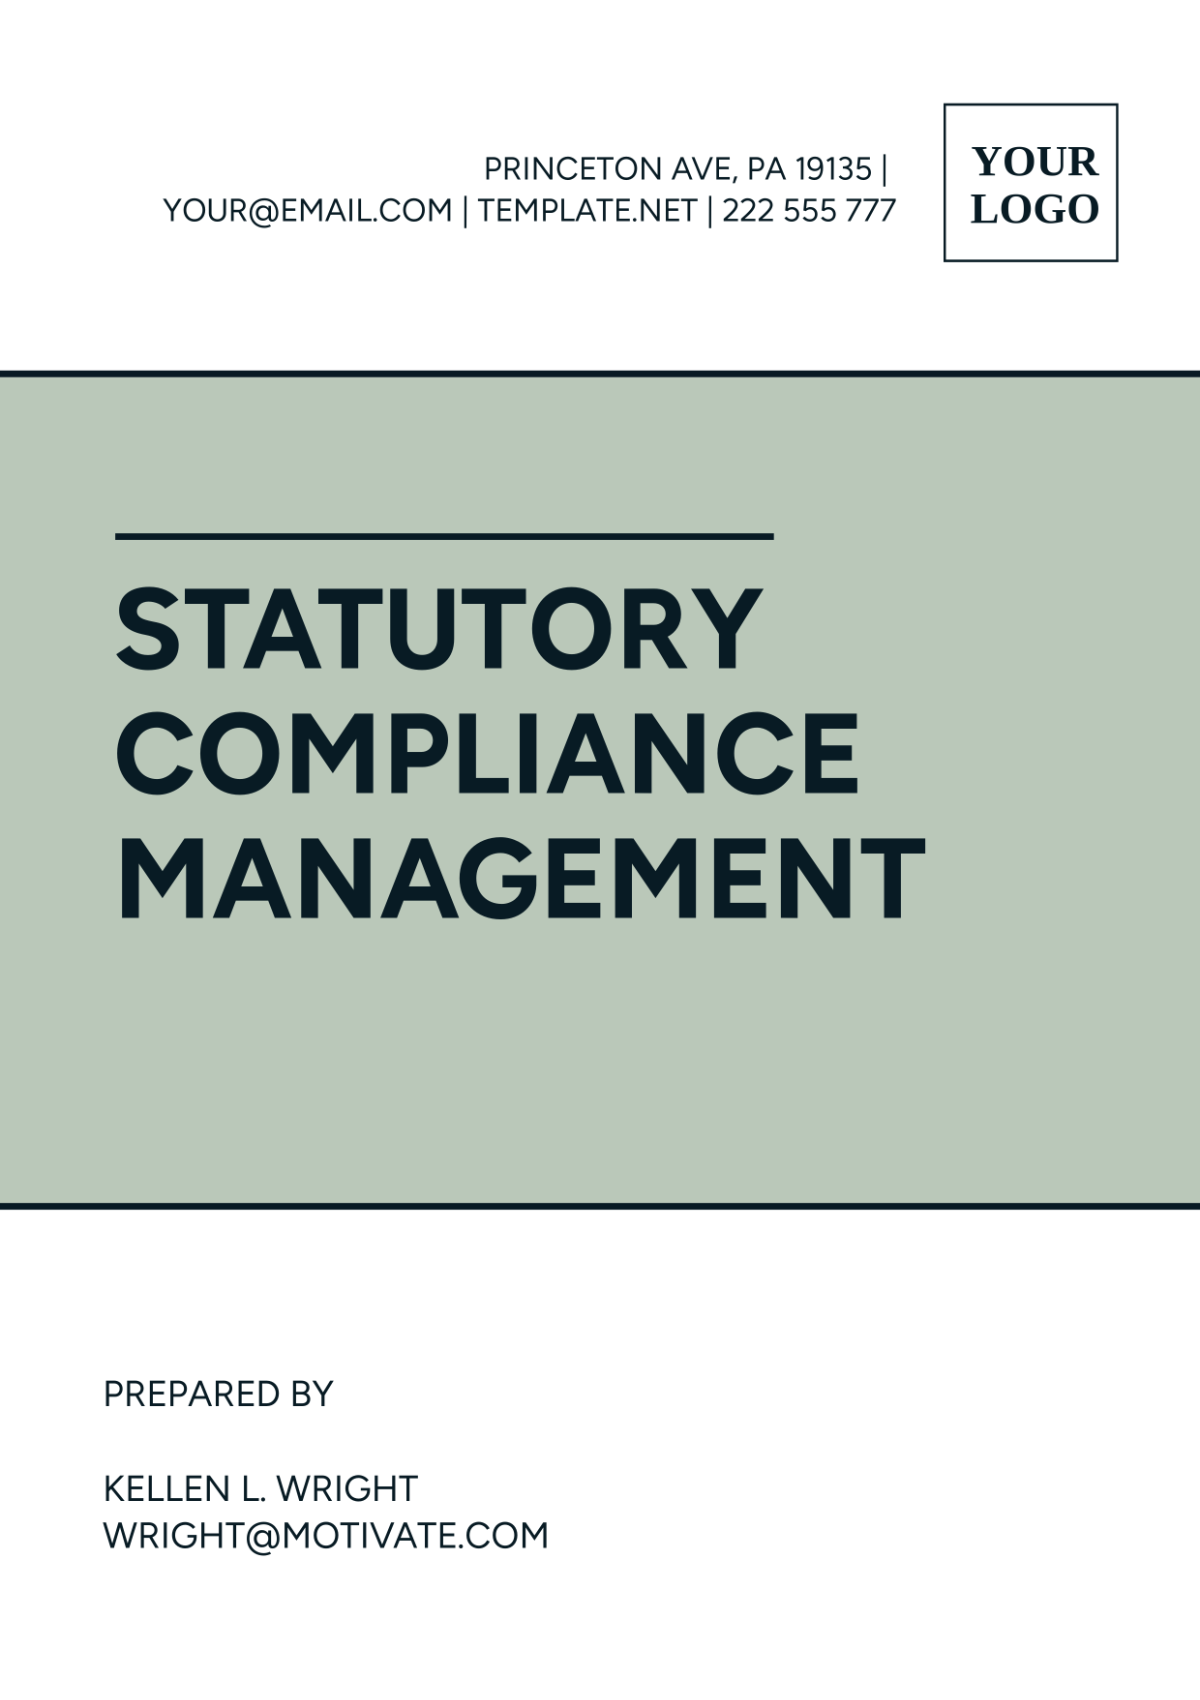 Statutory Compliance Management Template